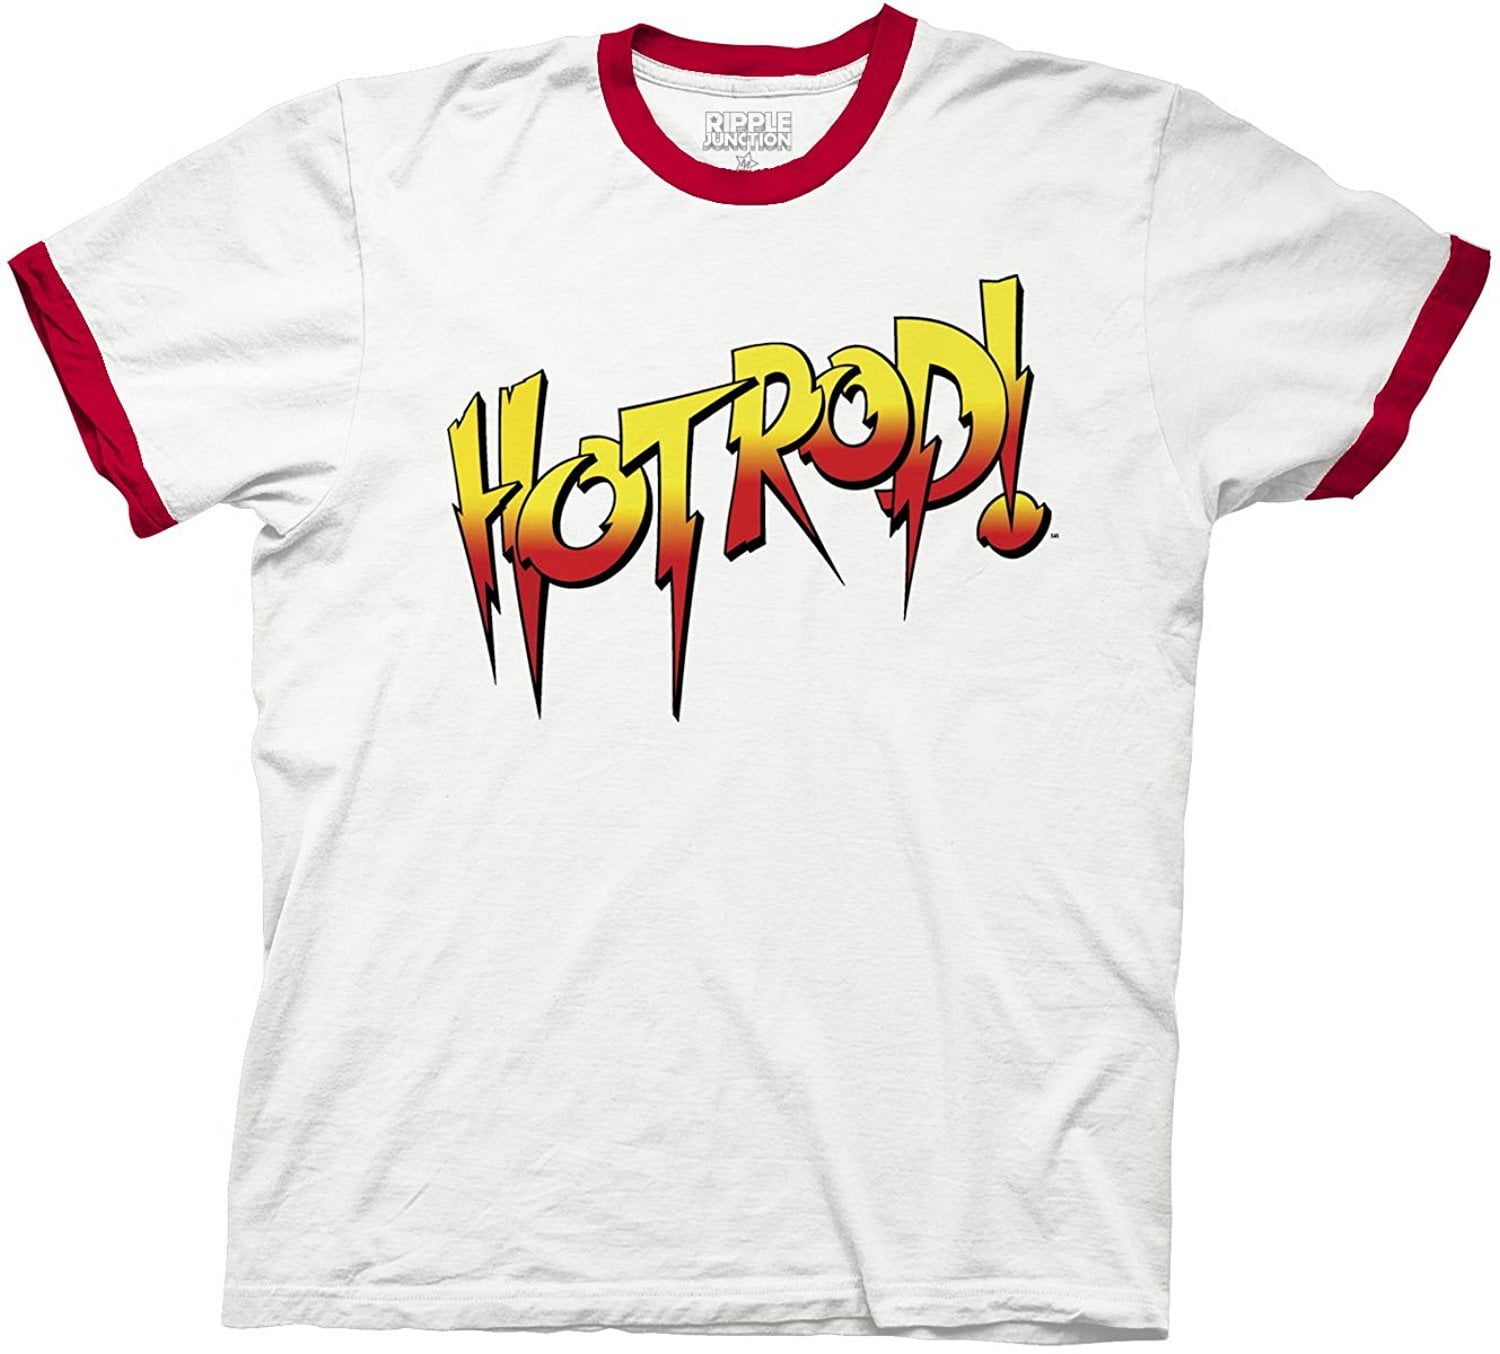 Officiel wwe-ROWDY RODDY PIPER /"Hotrod/" Retro T-shirt authentique